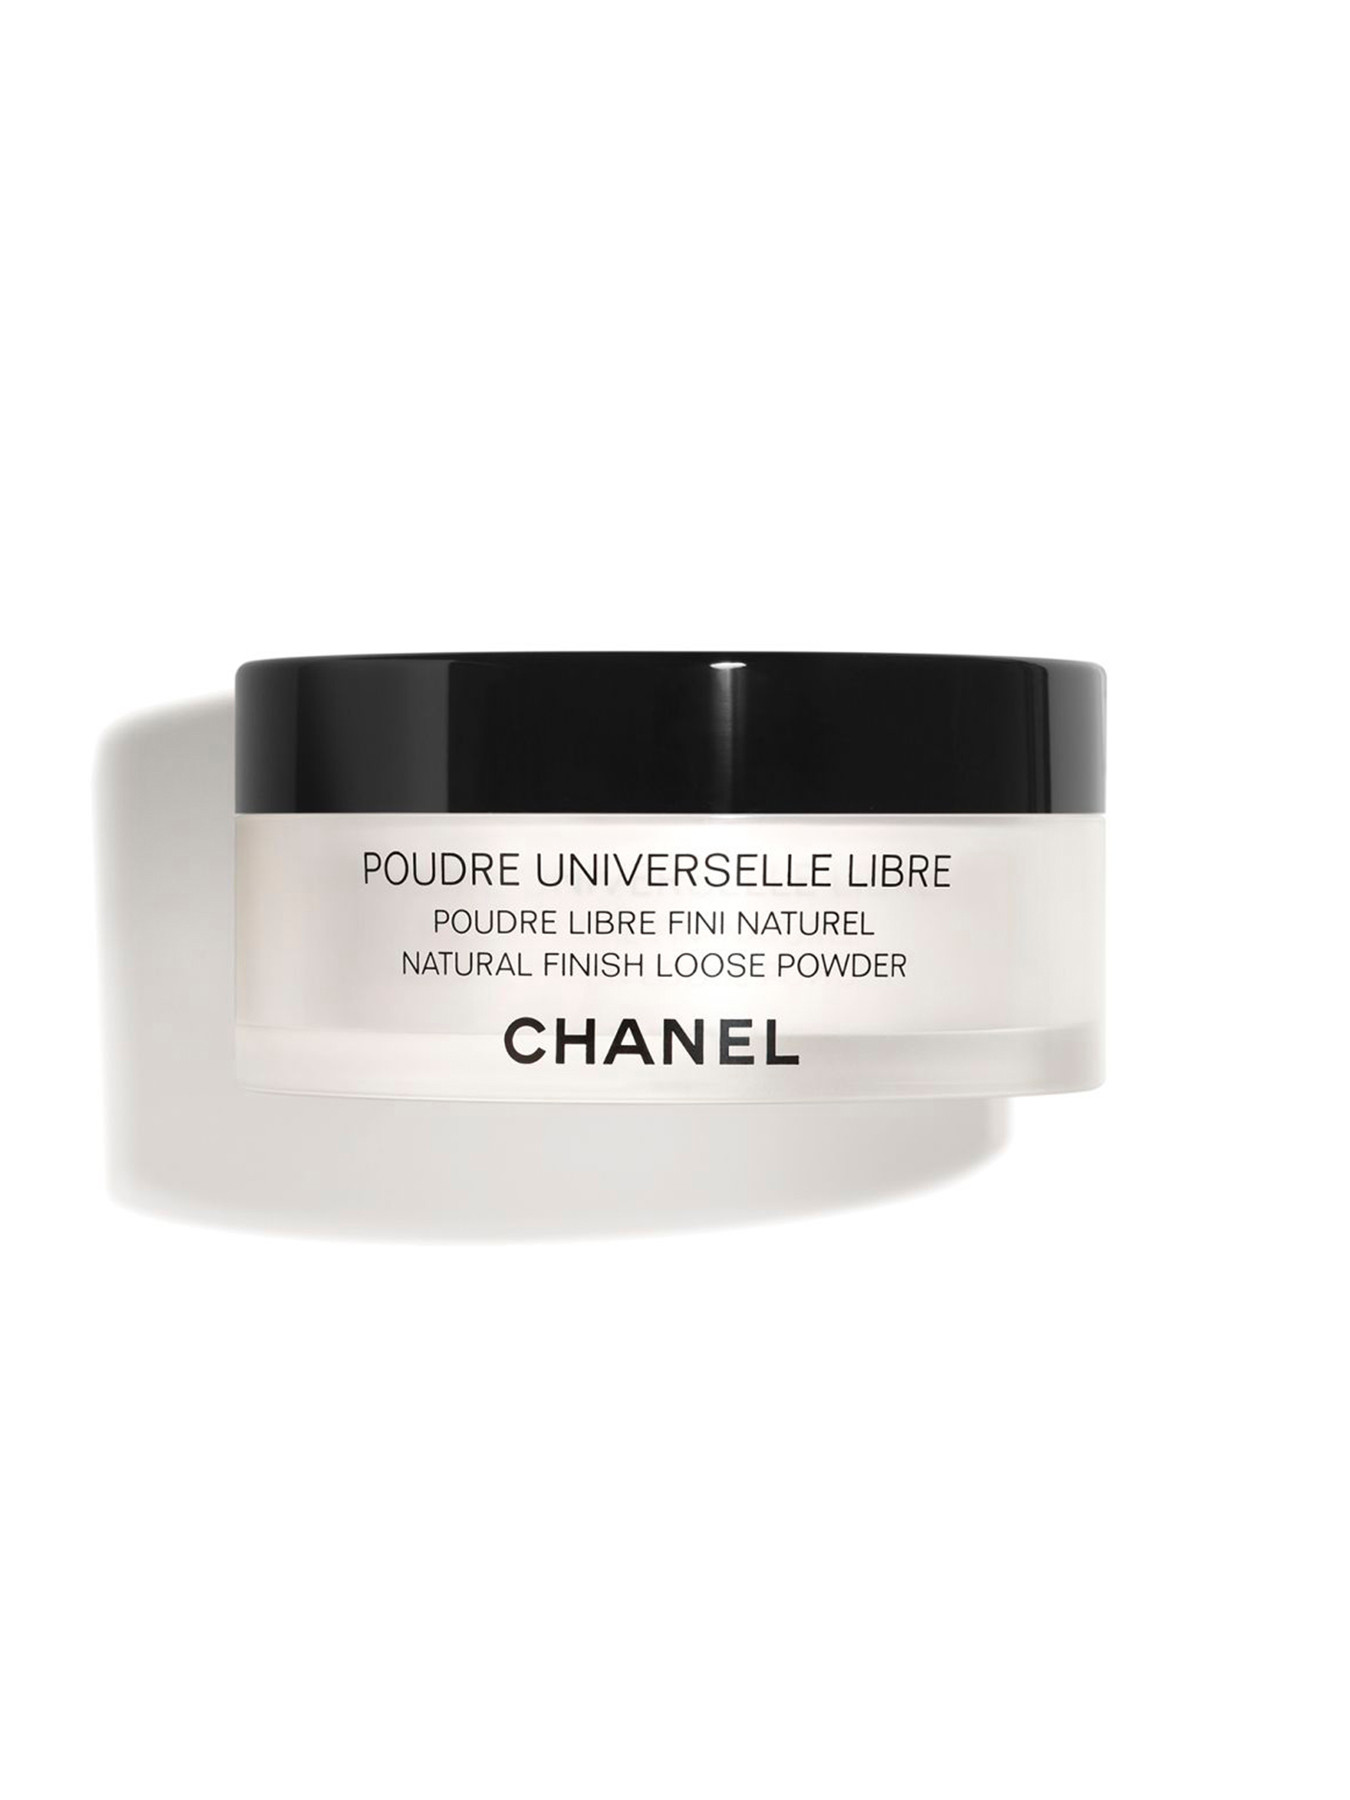 Chanel Poudre Universelle Libre Natural Finish Loose Powder 10